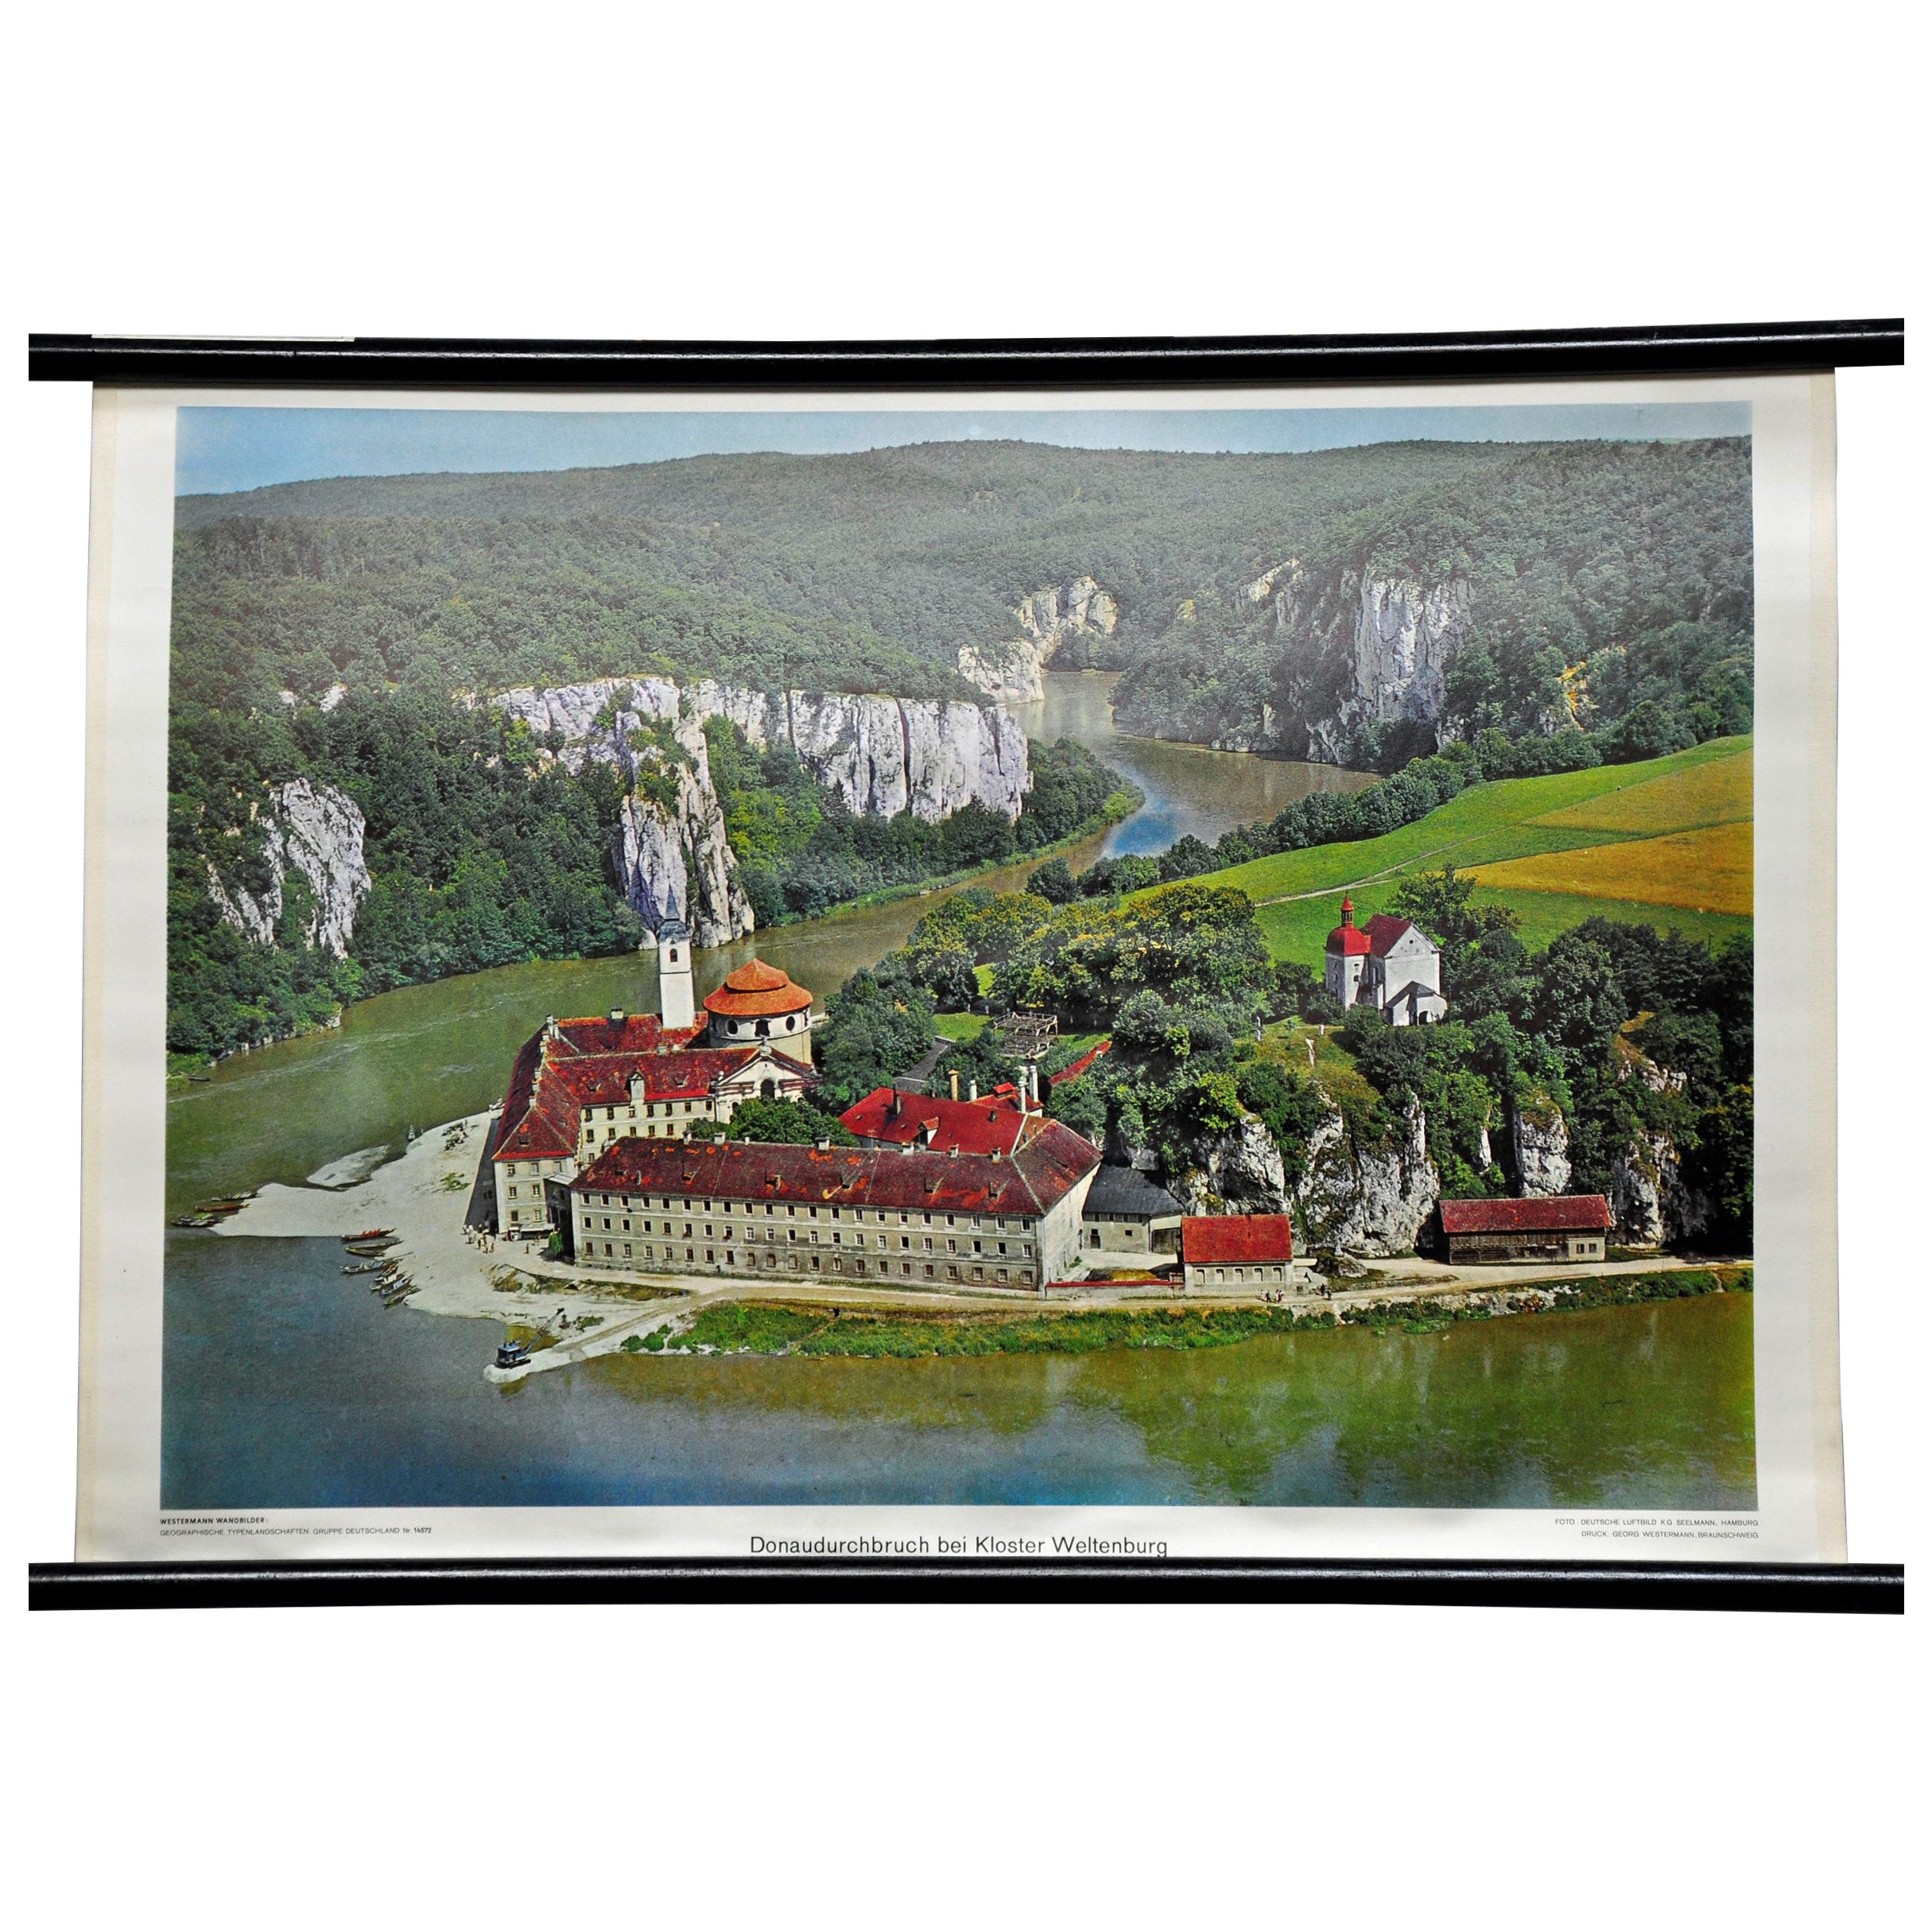 Danubian Breach Monastery Weltenburg - Affiche murale pliable vintage avec carte murale